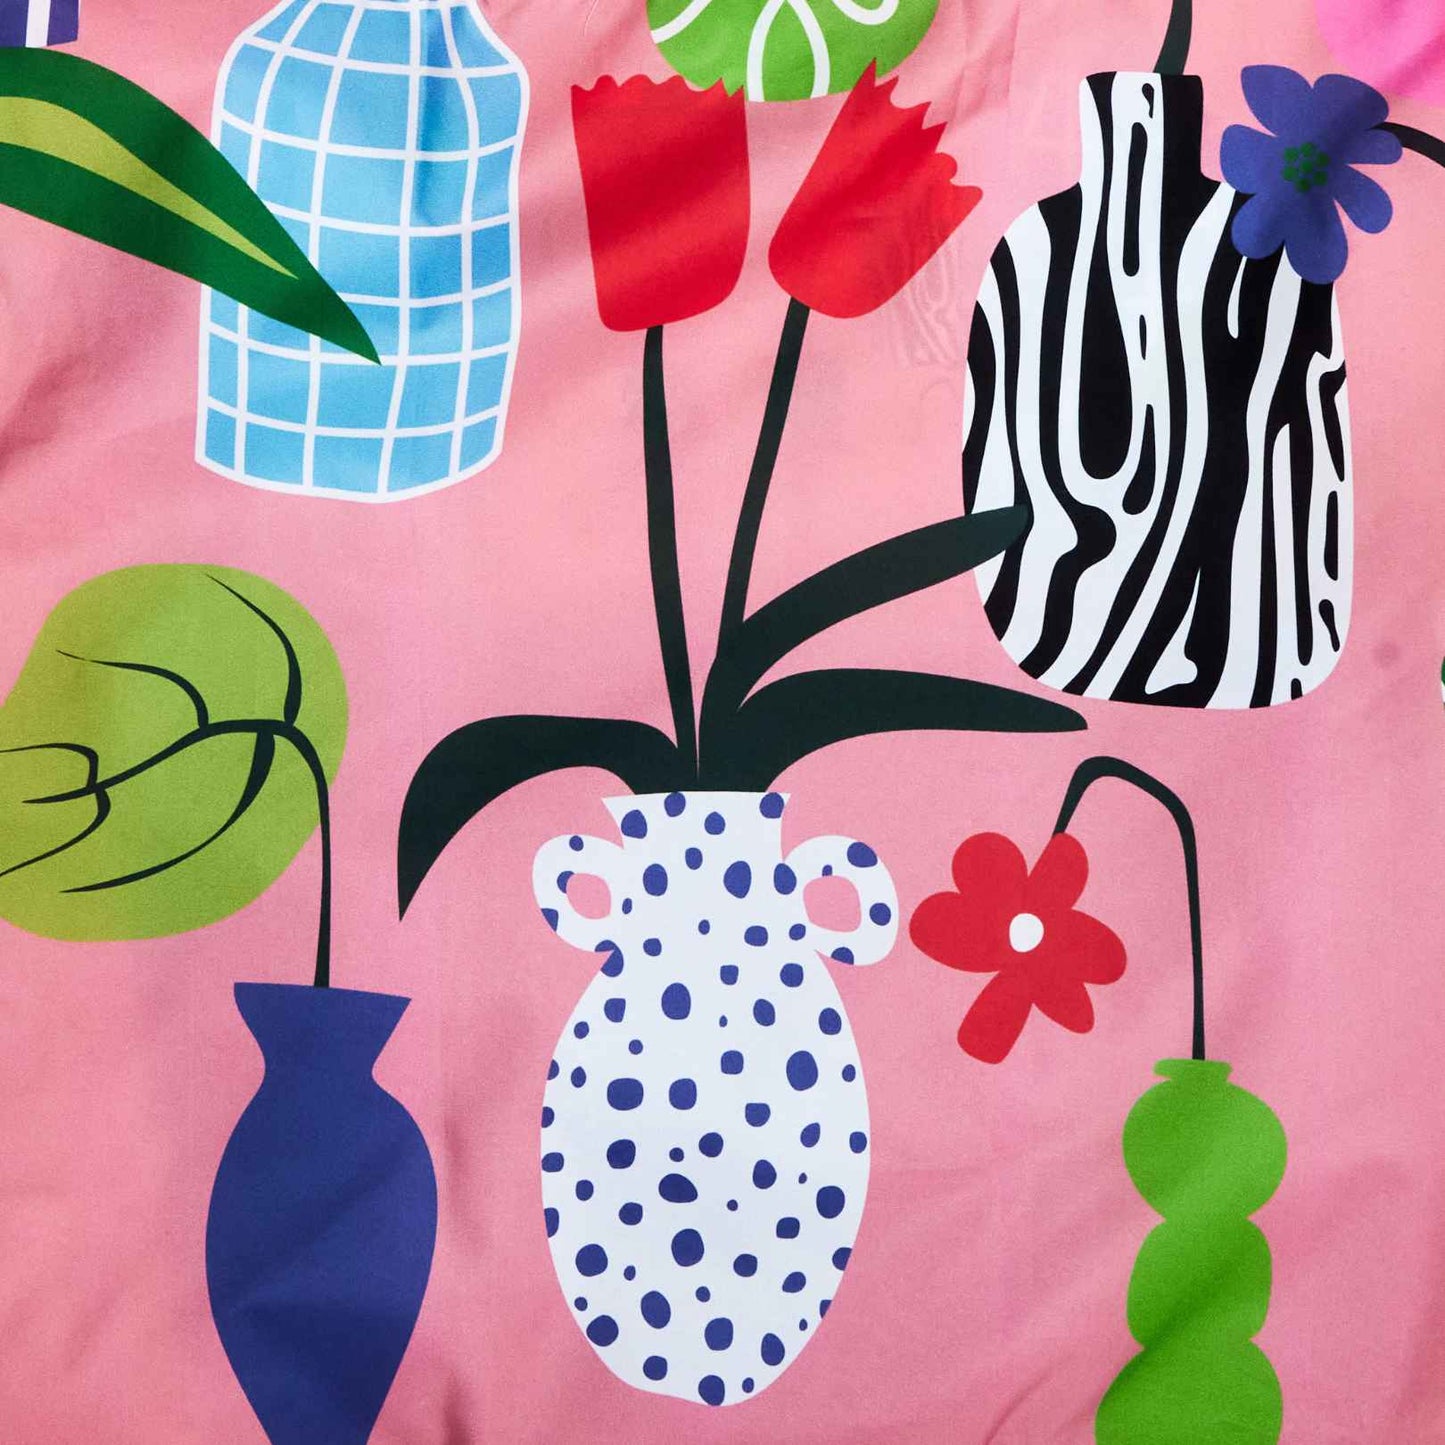 Vases Reusable Eco-Friendly Shopping Bag